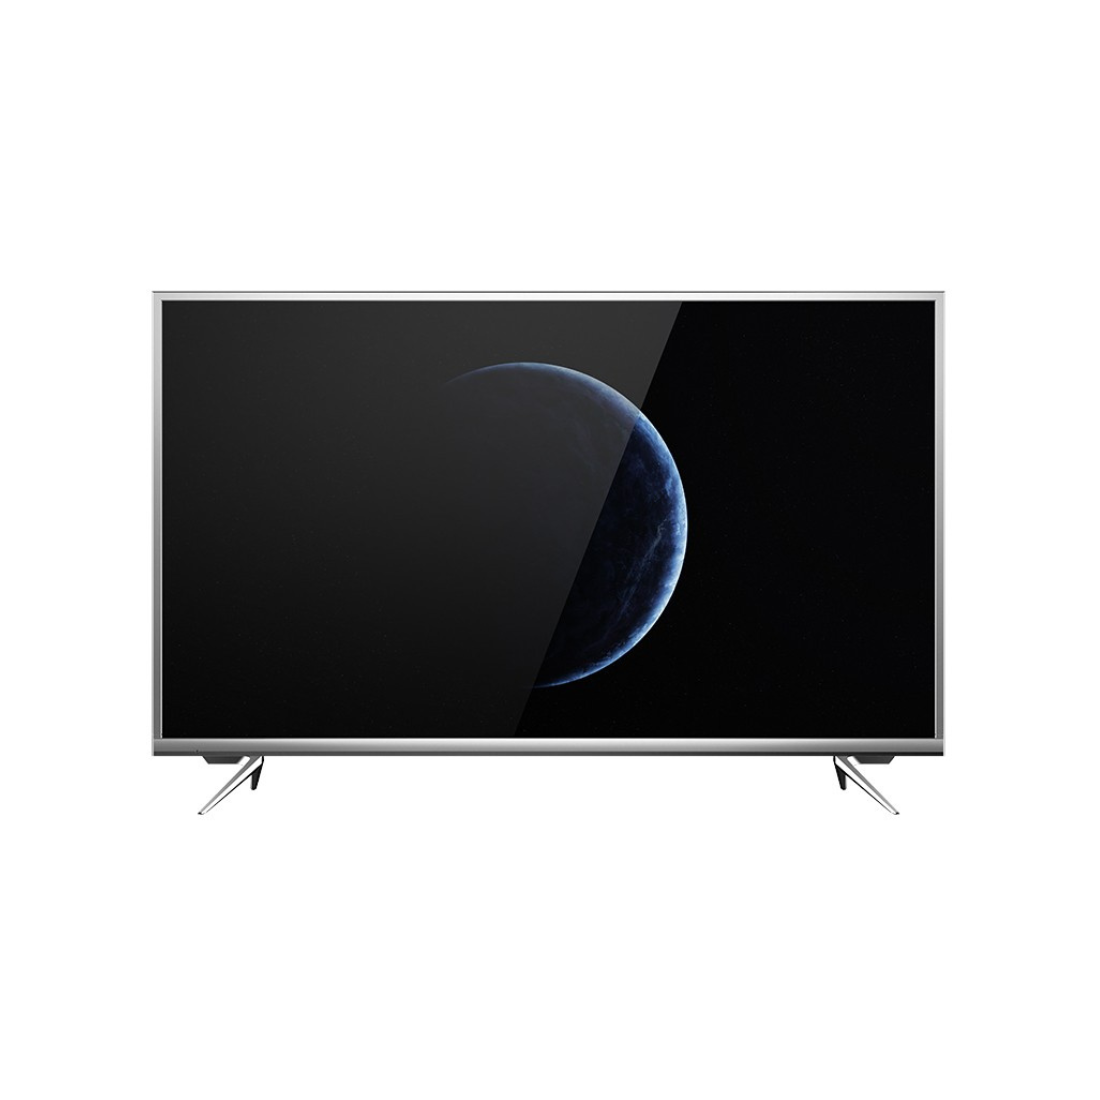 hyundai-ultra-hd-smart-tv-65-inch-full-view-mang-kosme